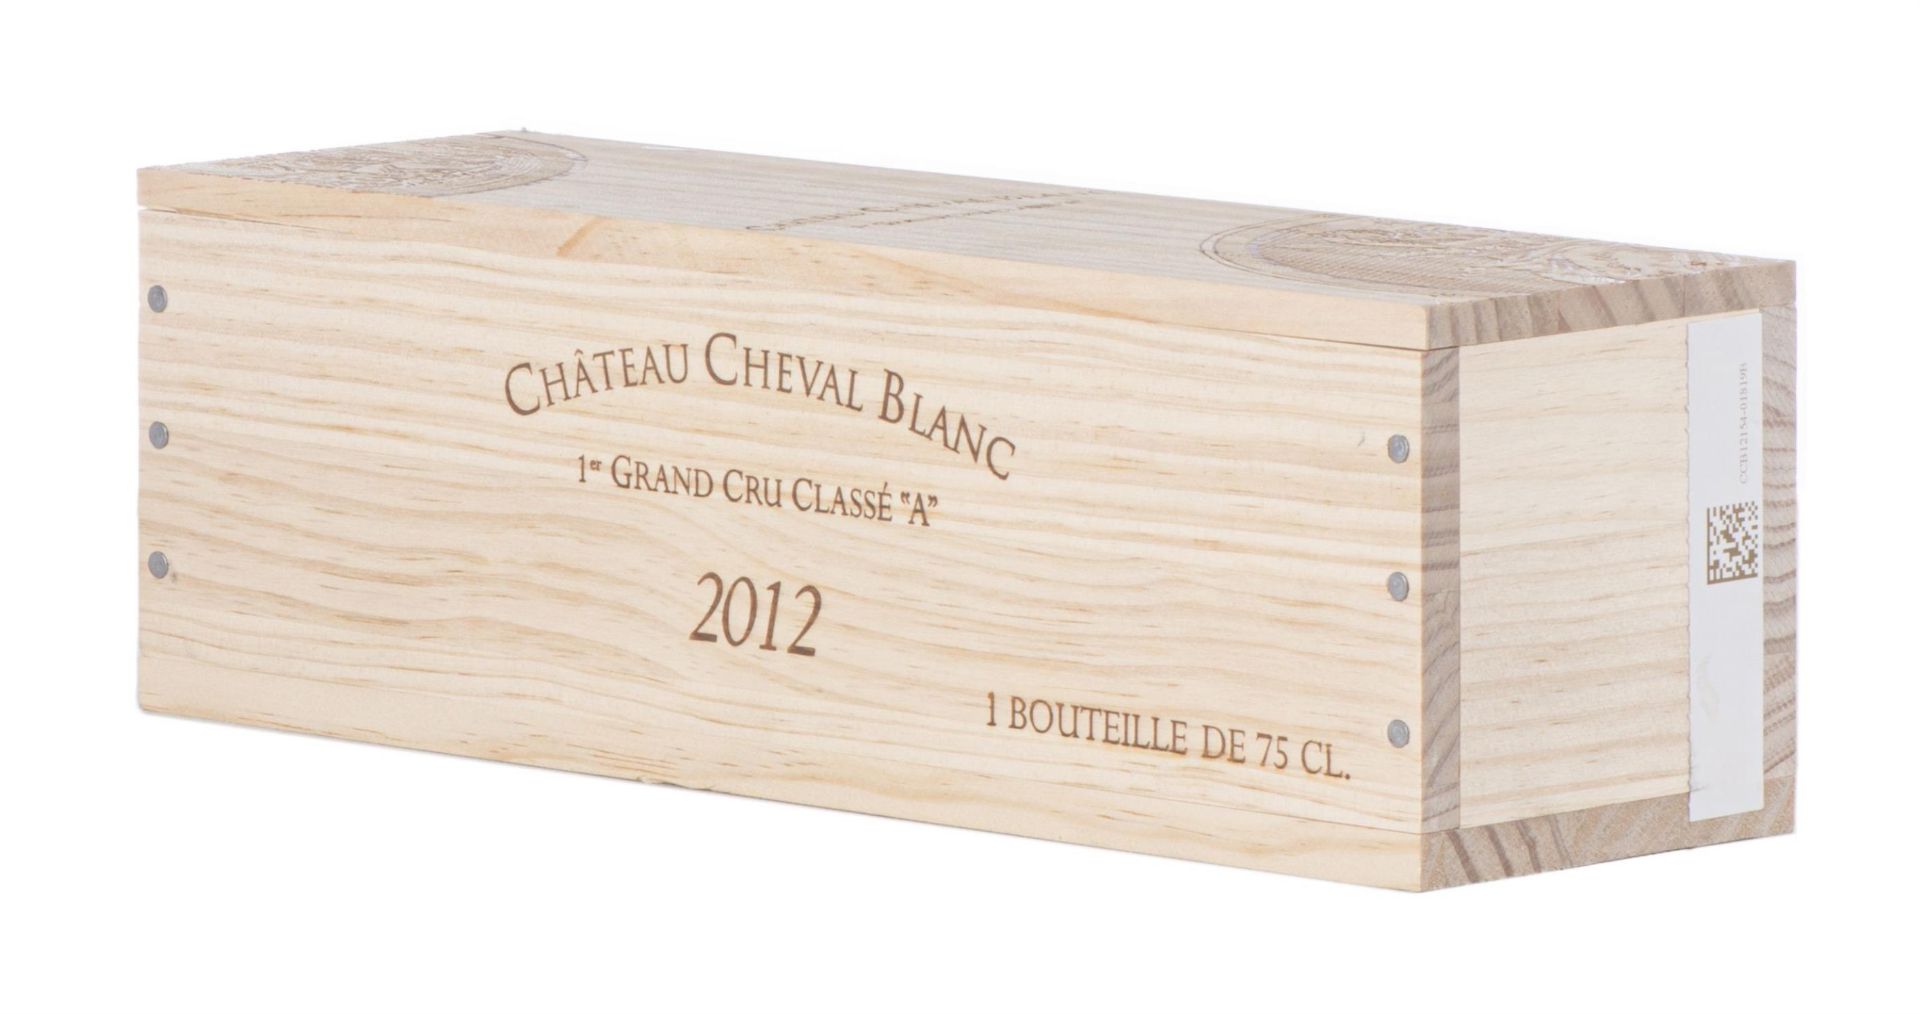 Château Cheval Blanc, 1er Grand Cru classé classé "A", 2012 - Image 3 of 4